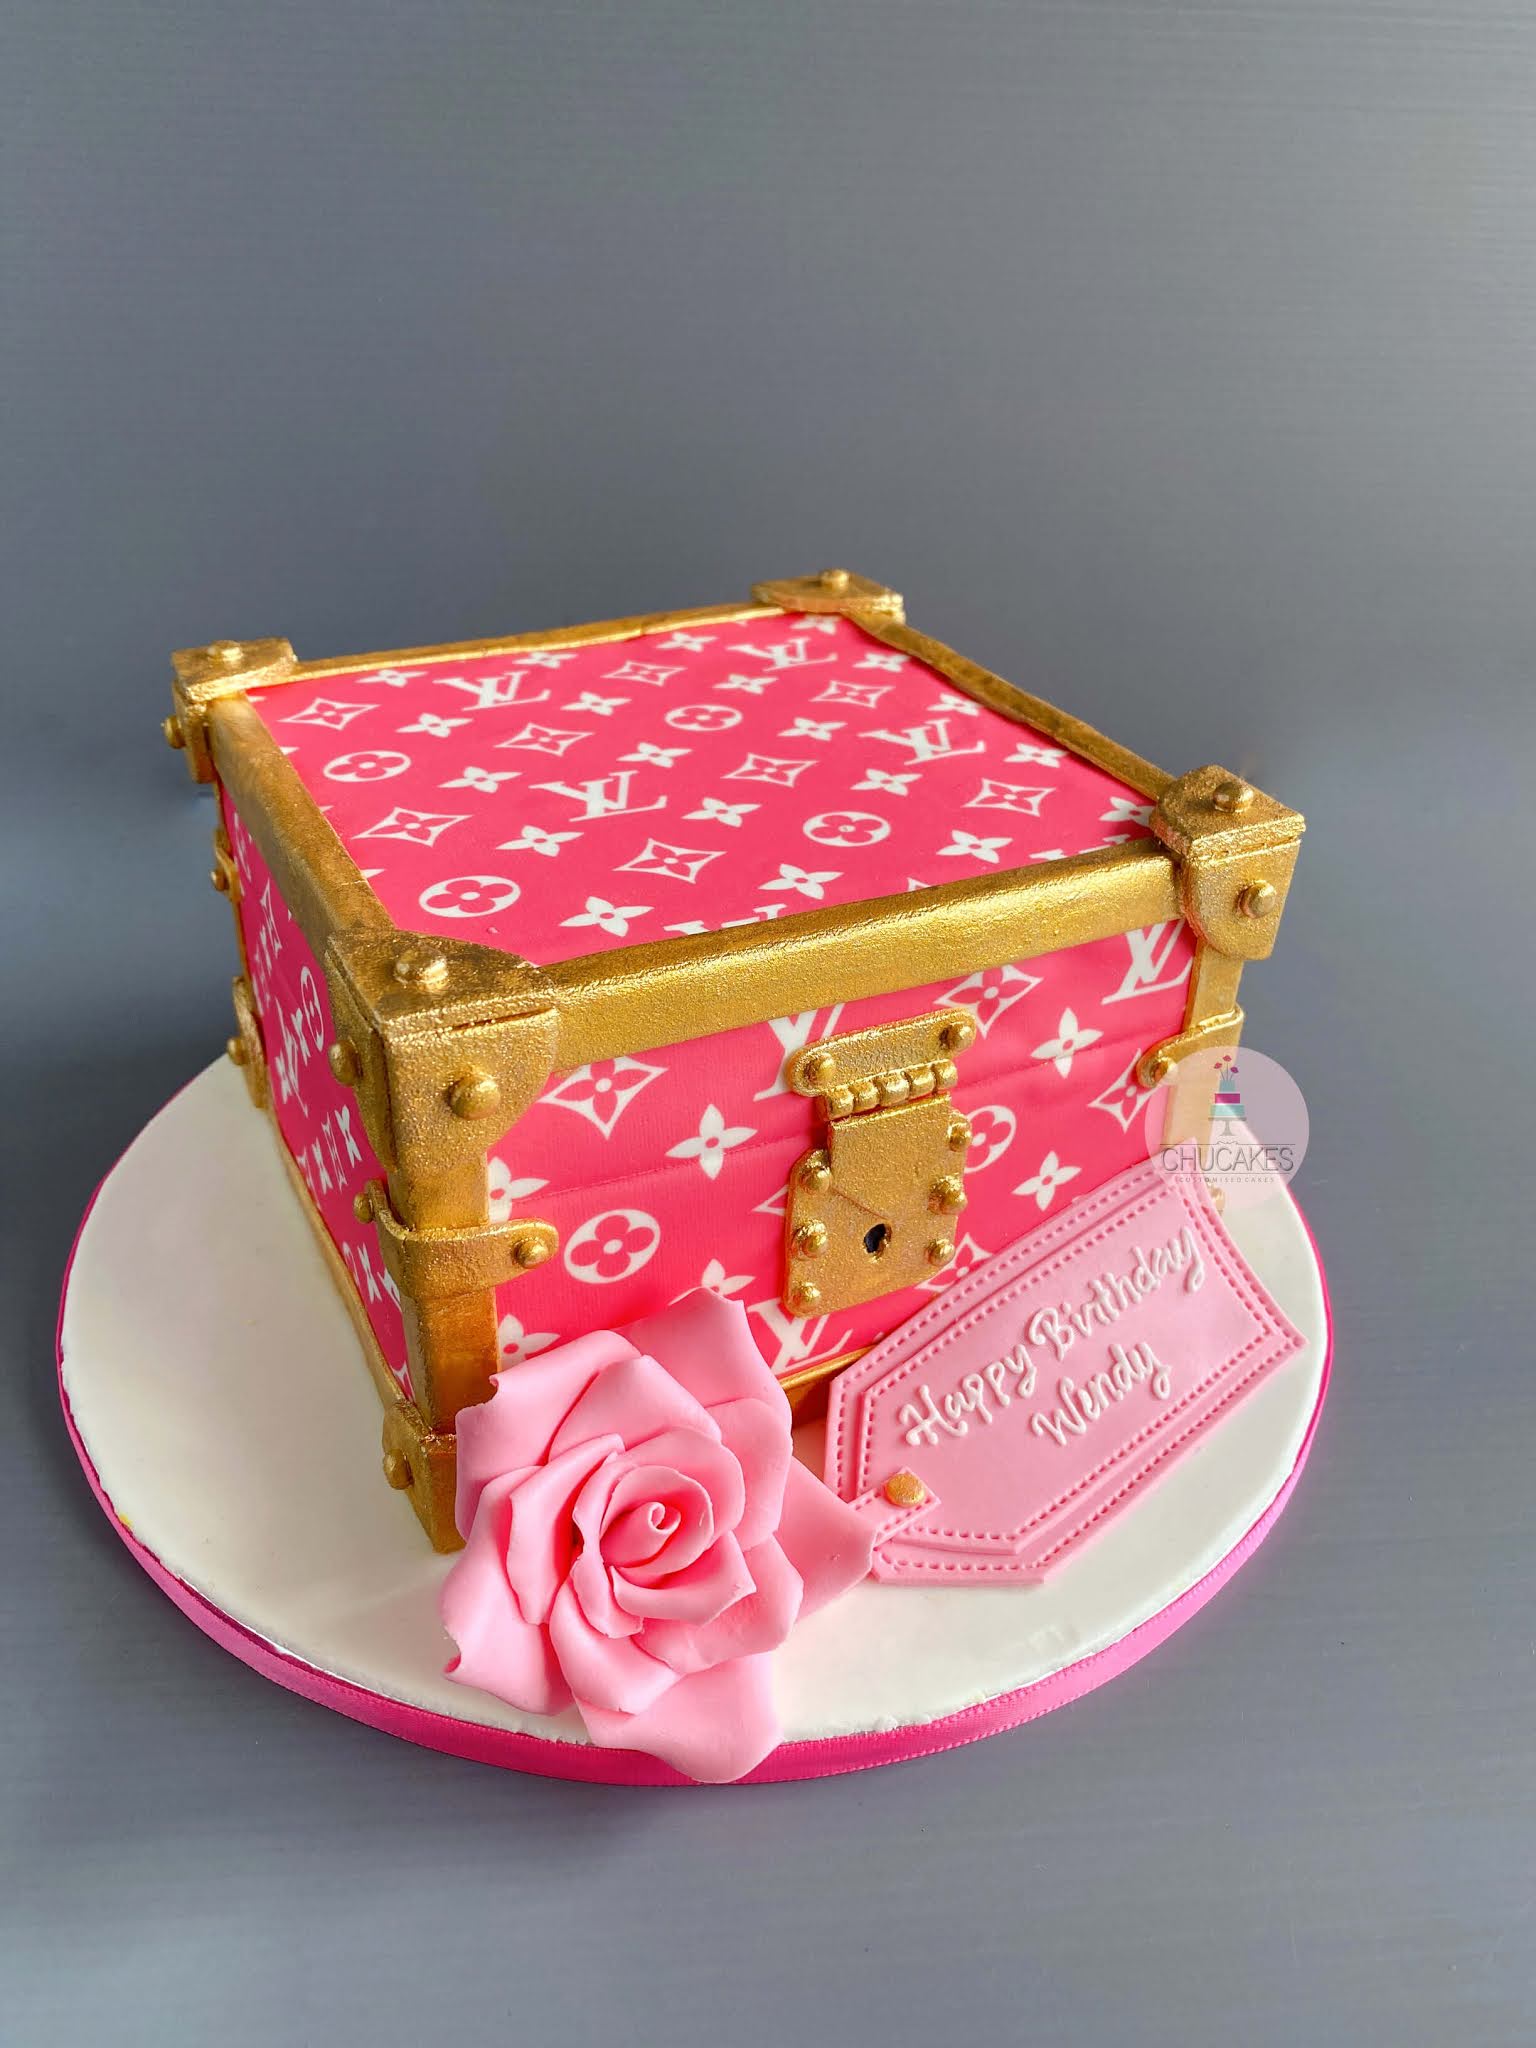 Pink LV box cake chucakes